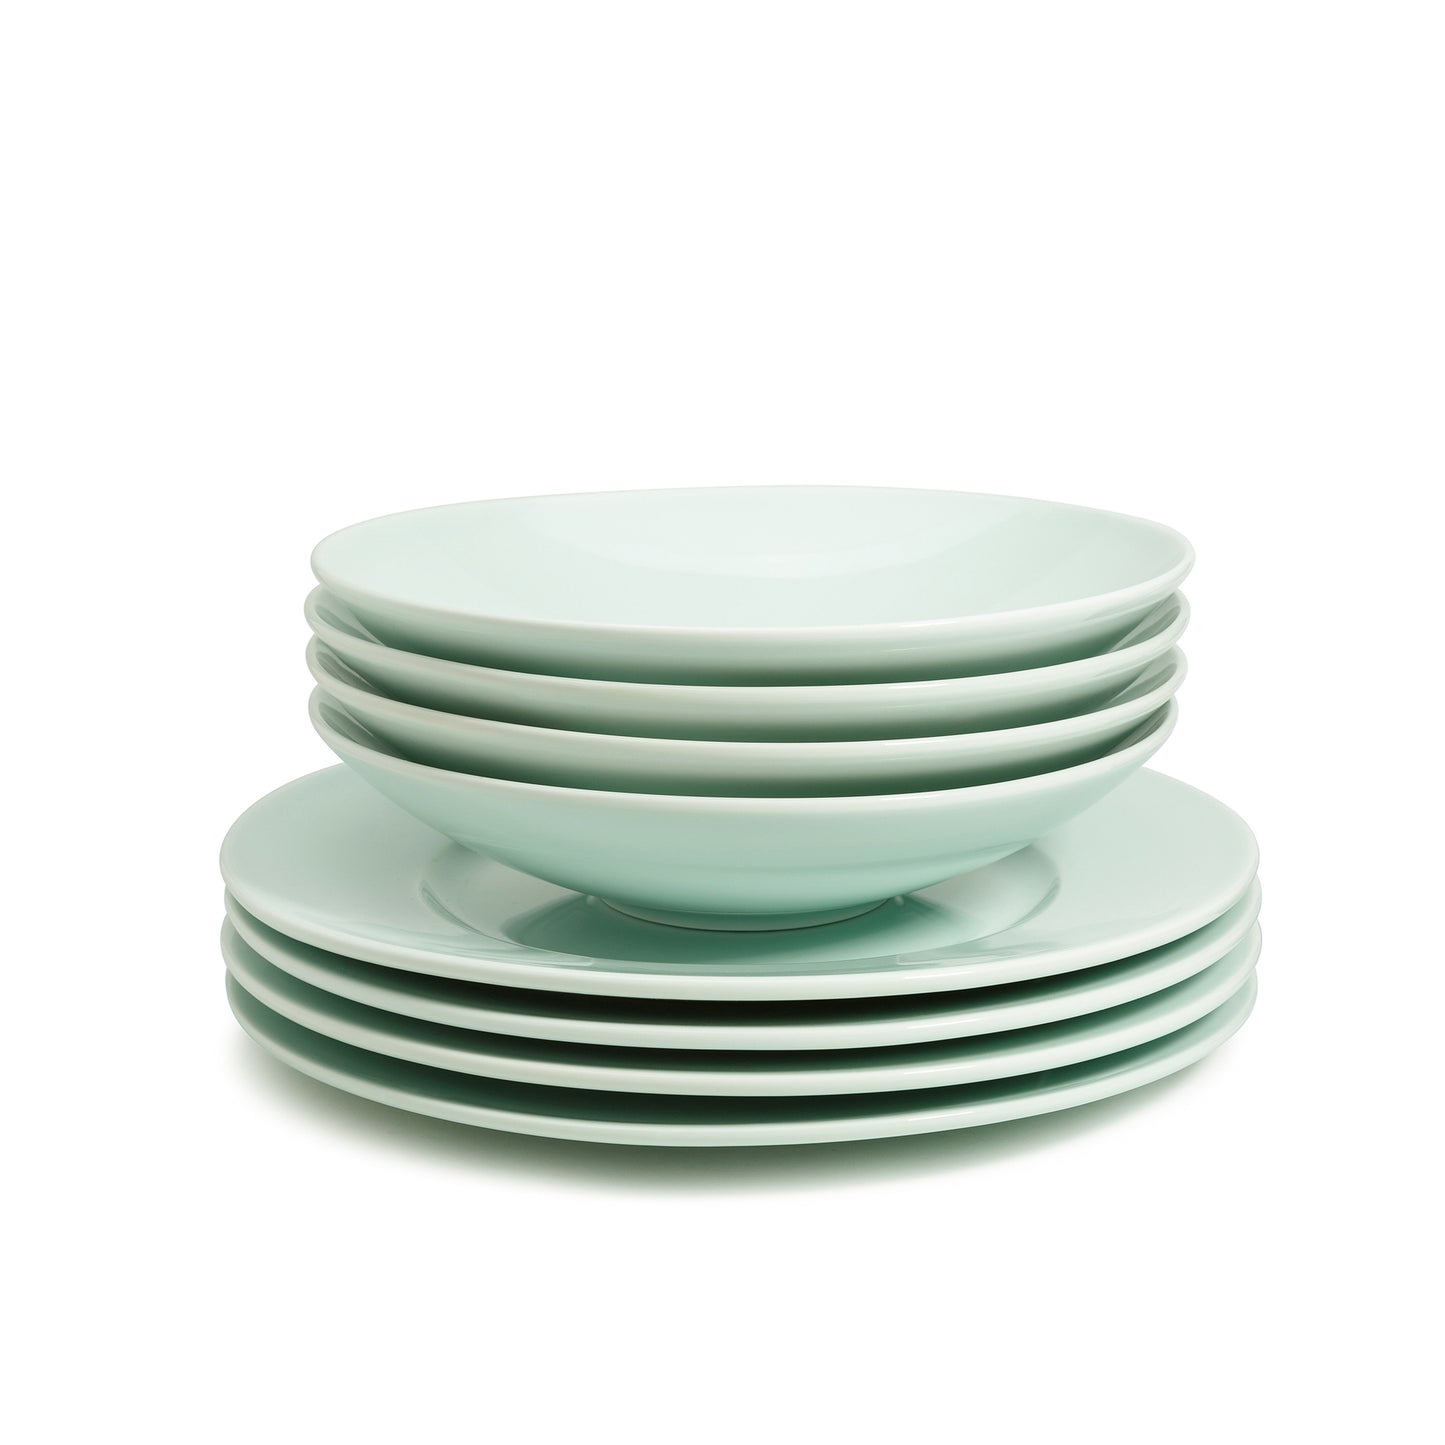 8 piece green celadon porcelain dinnerware set, 11 3/4" wide rim dinner plates, 9" salad/soup bowls, media 5 of 6